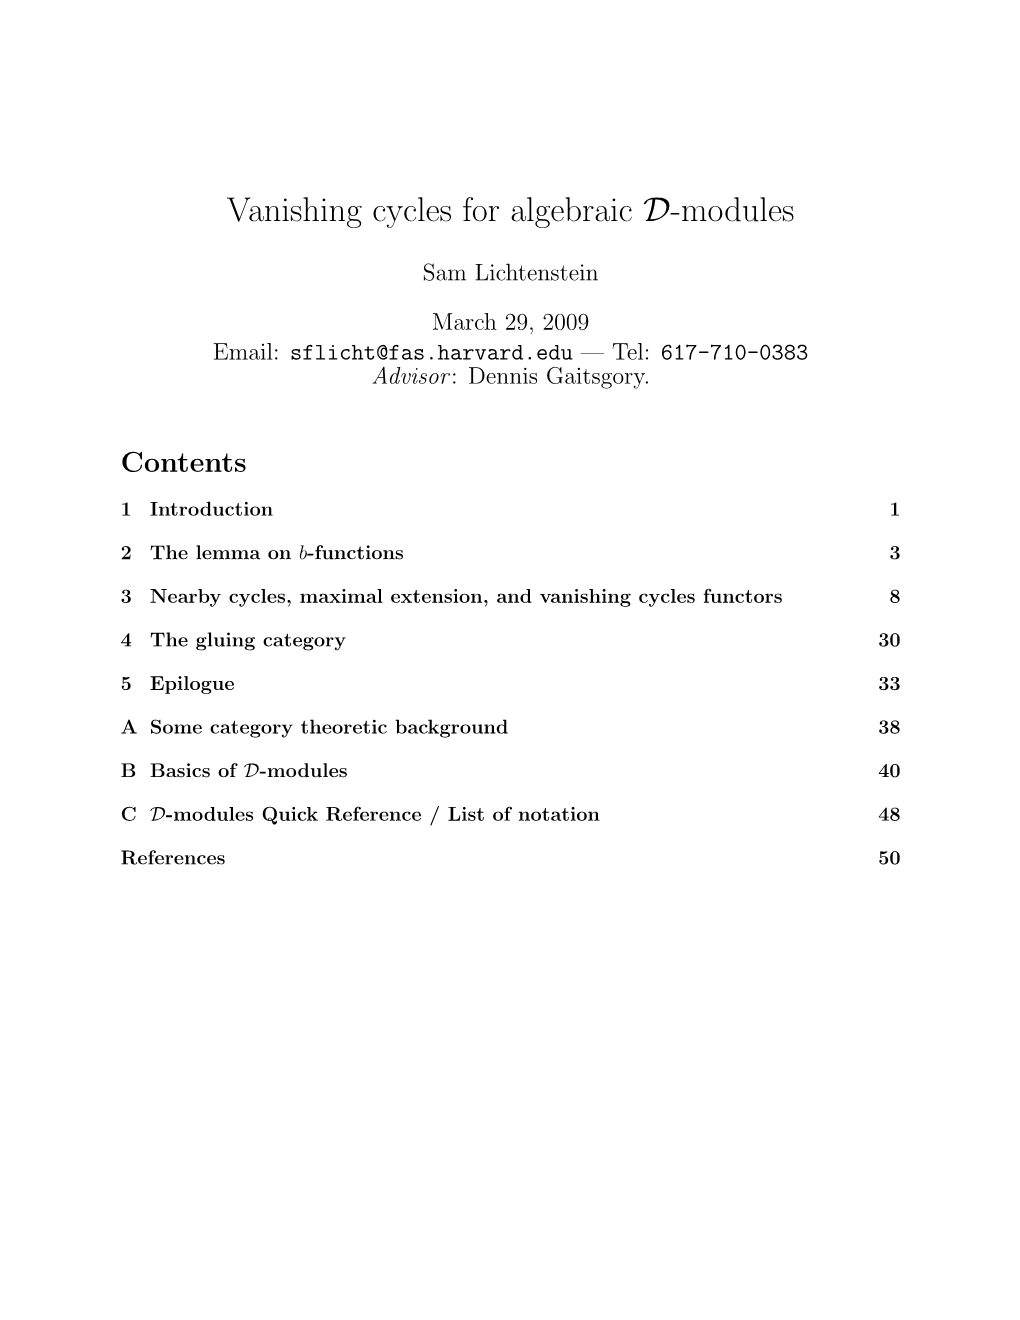 Vanishing Cycles for Algebraic D-Modules